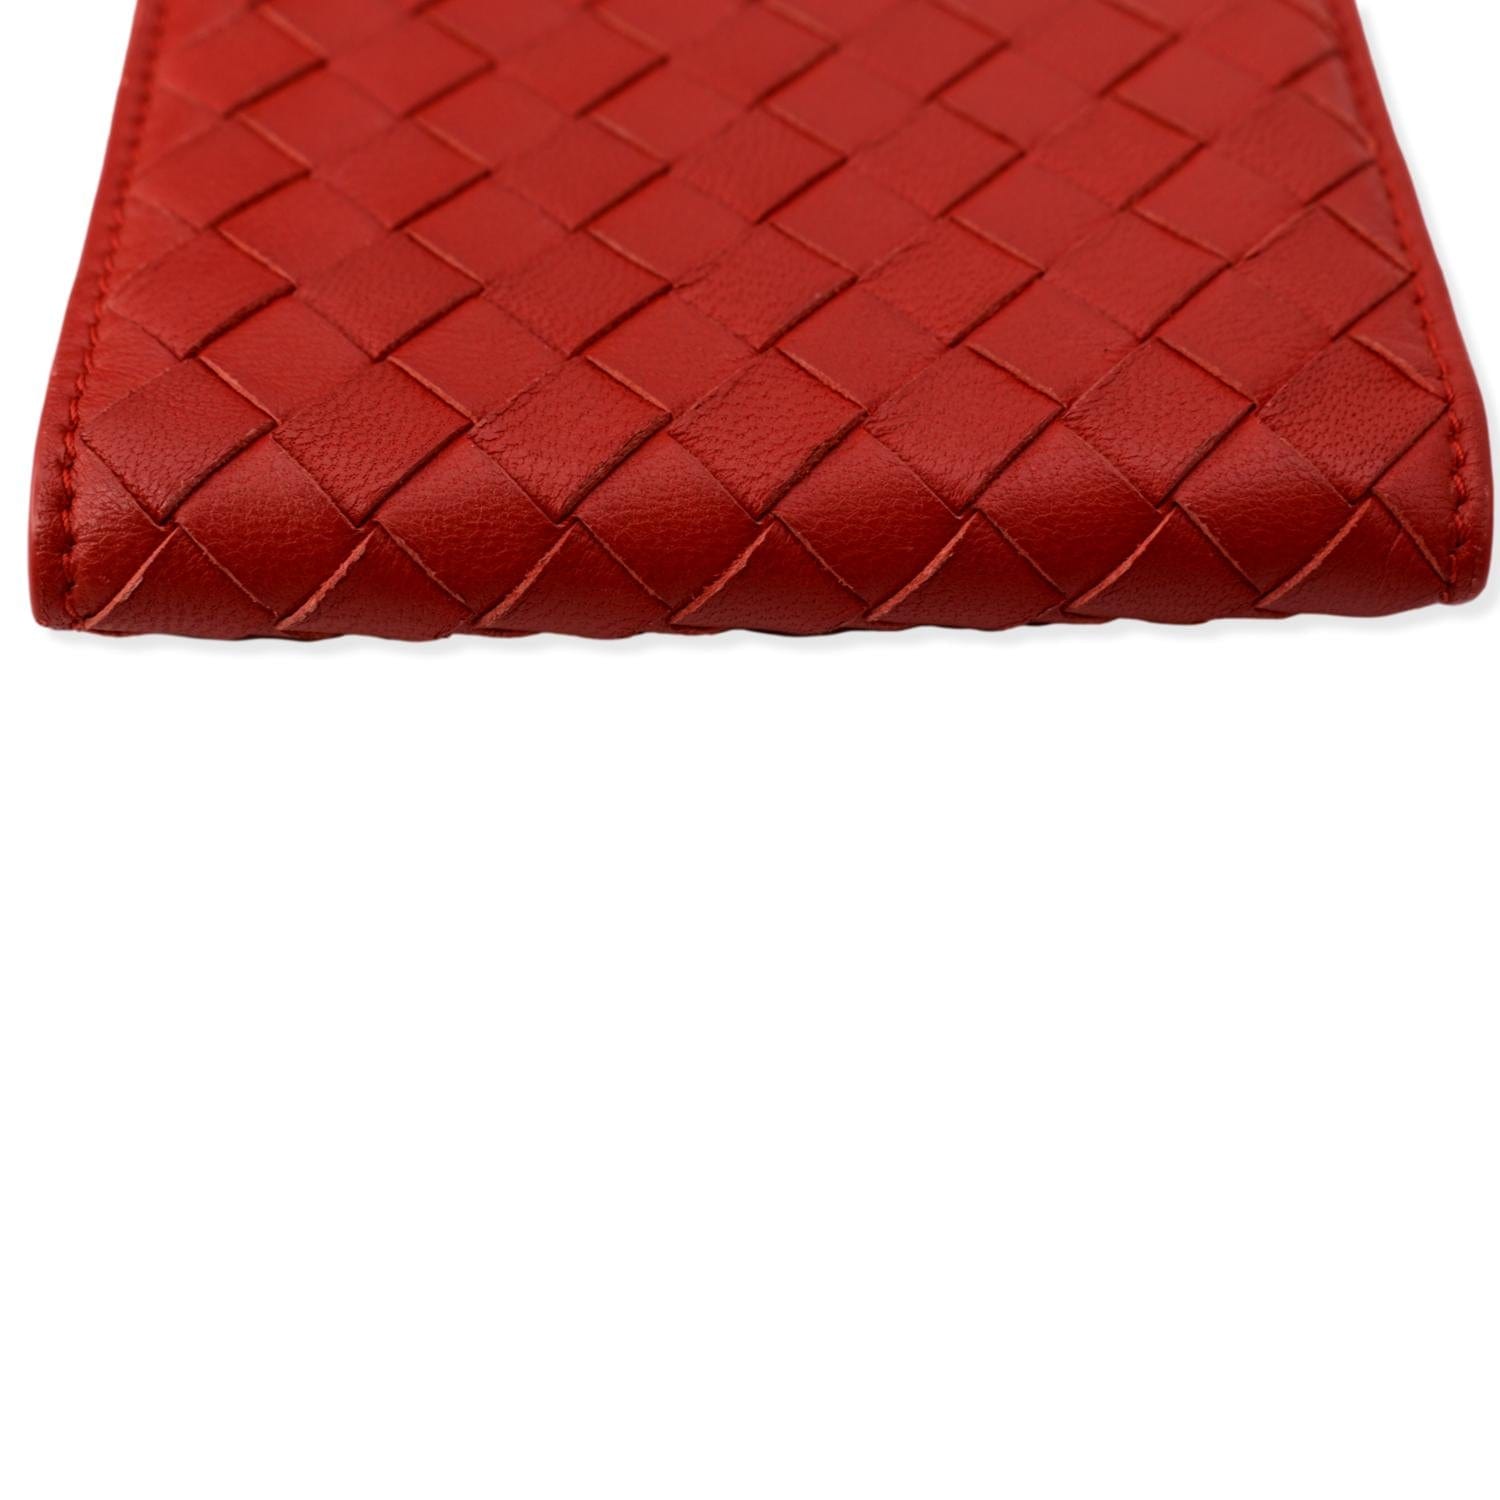 Bottega Veneta Intrecciato Leather Bifold Mens Wallet Red